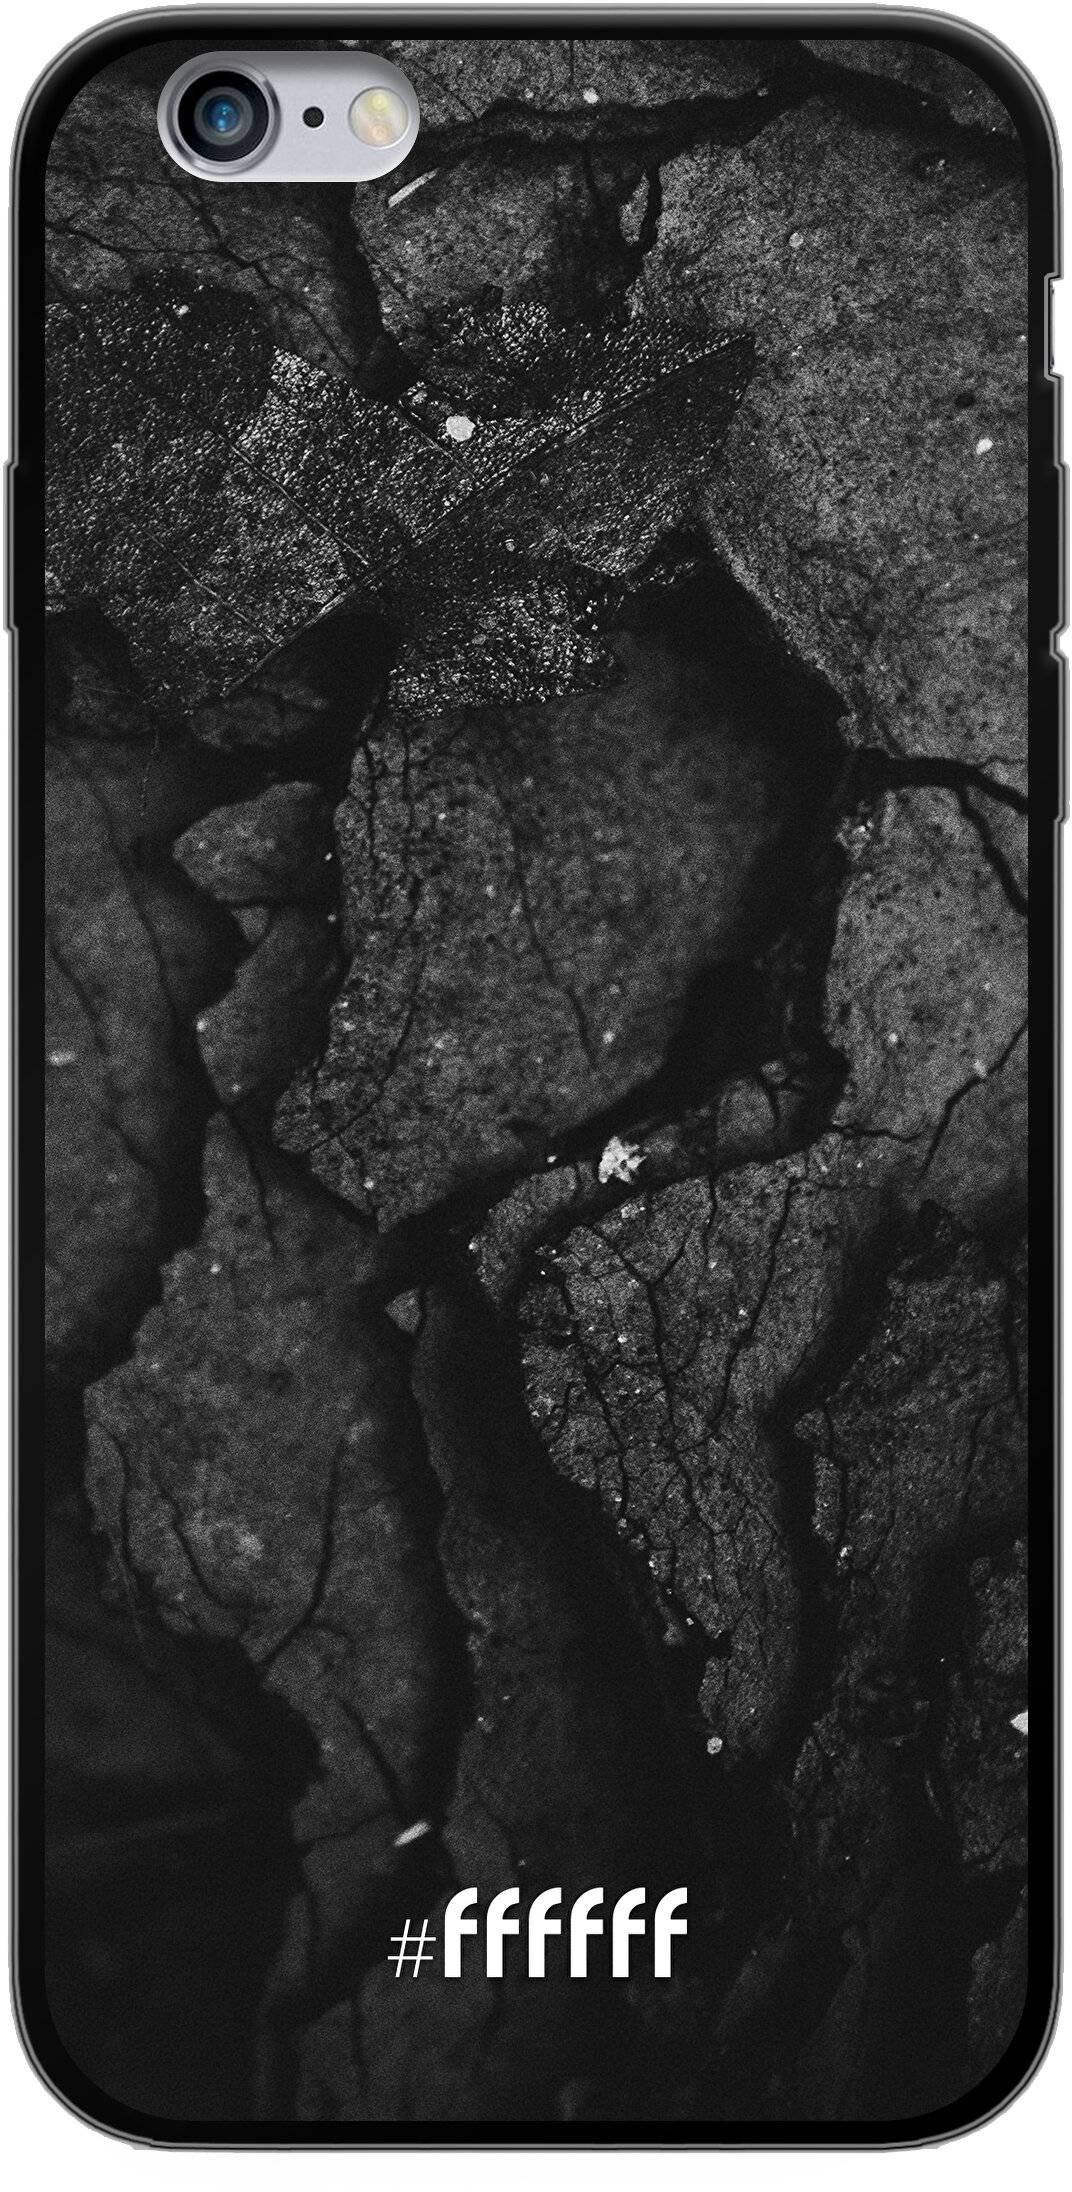 Dark Rock Formation iPhone 6